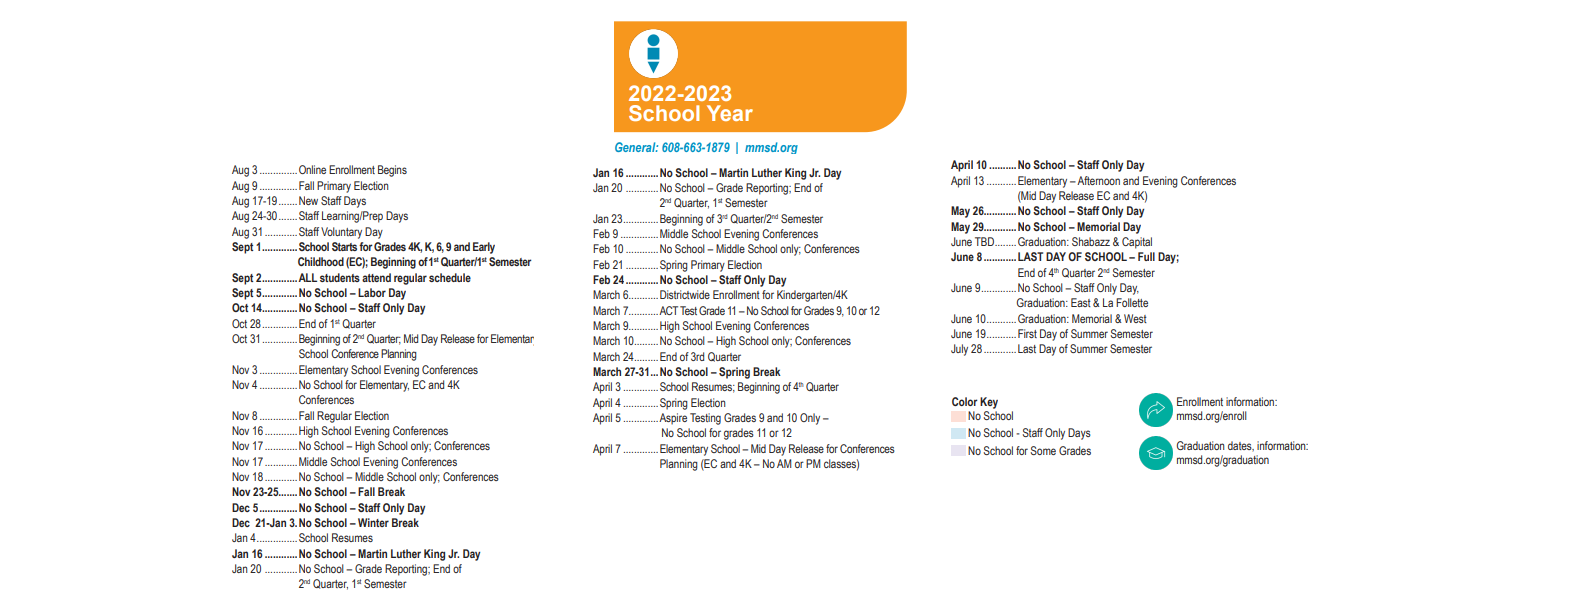 District School Academic Calendar Key for East High